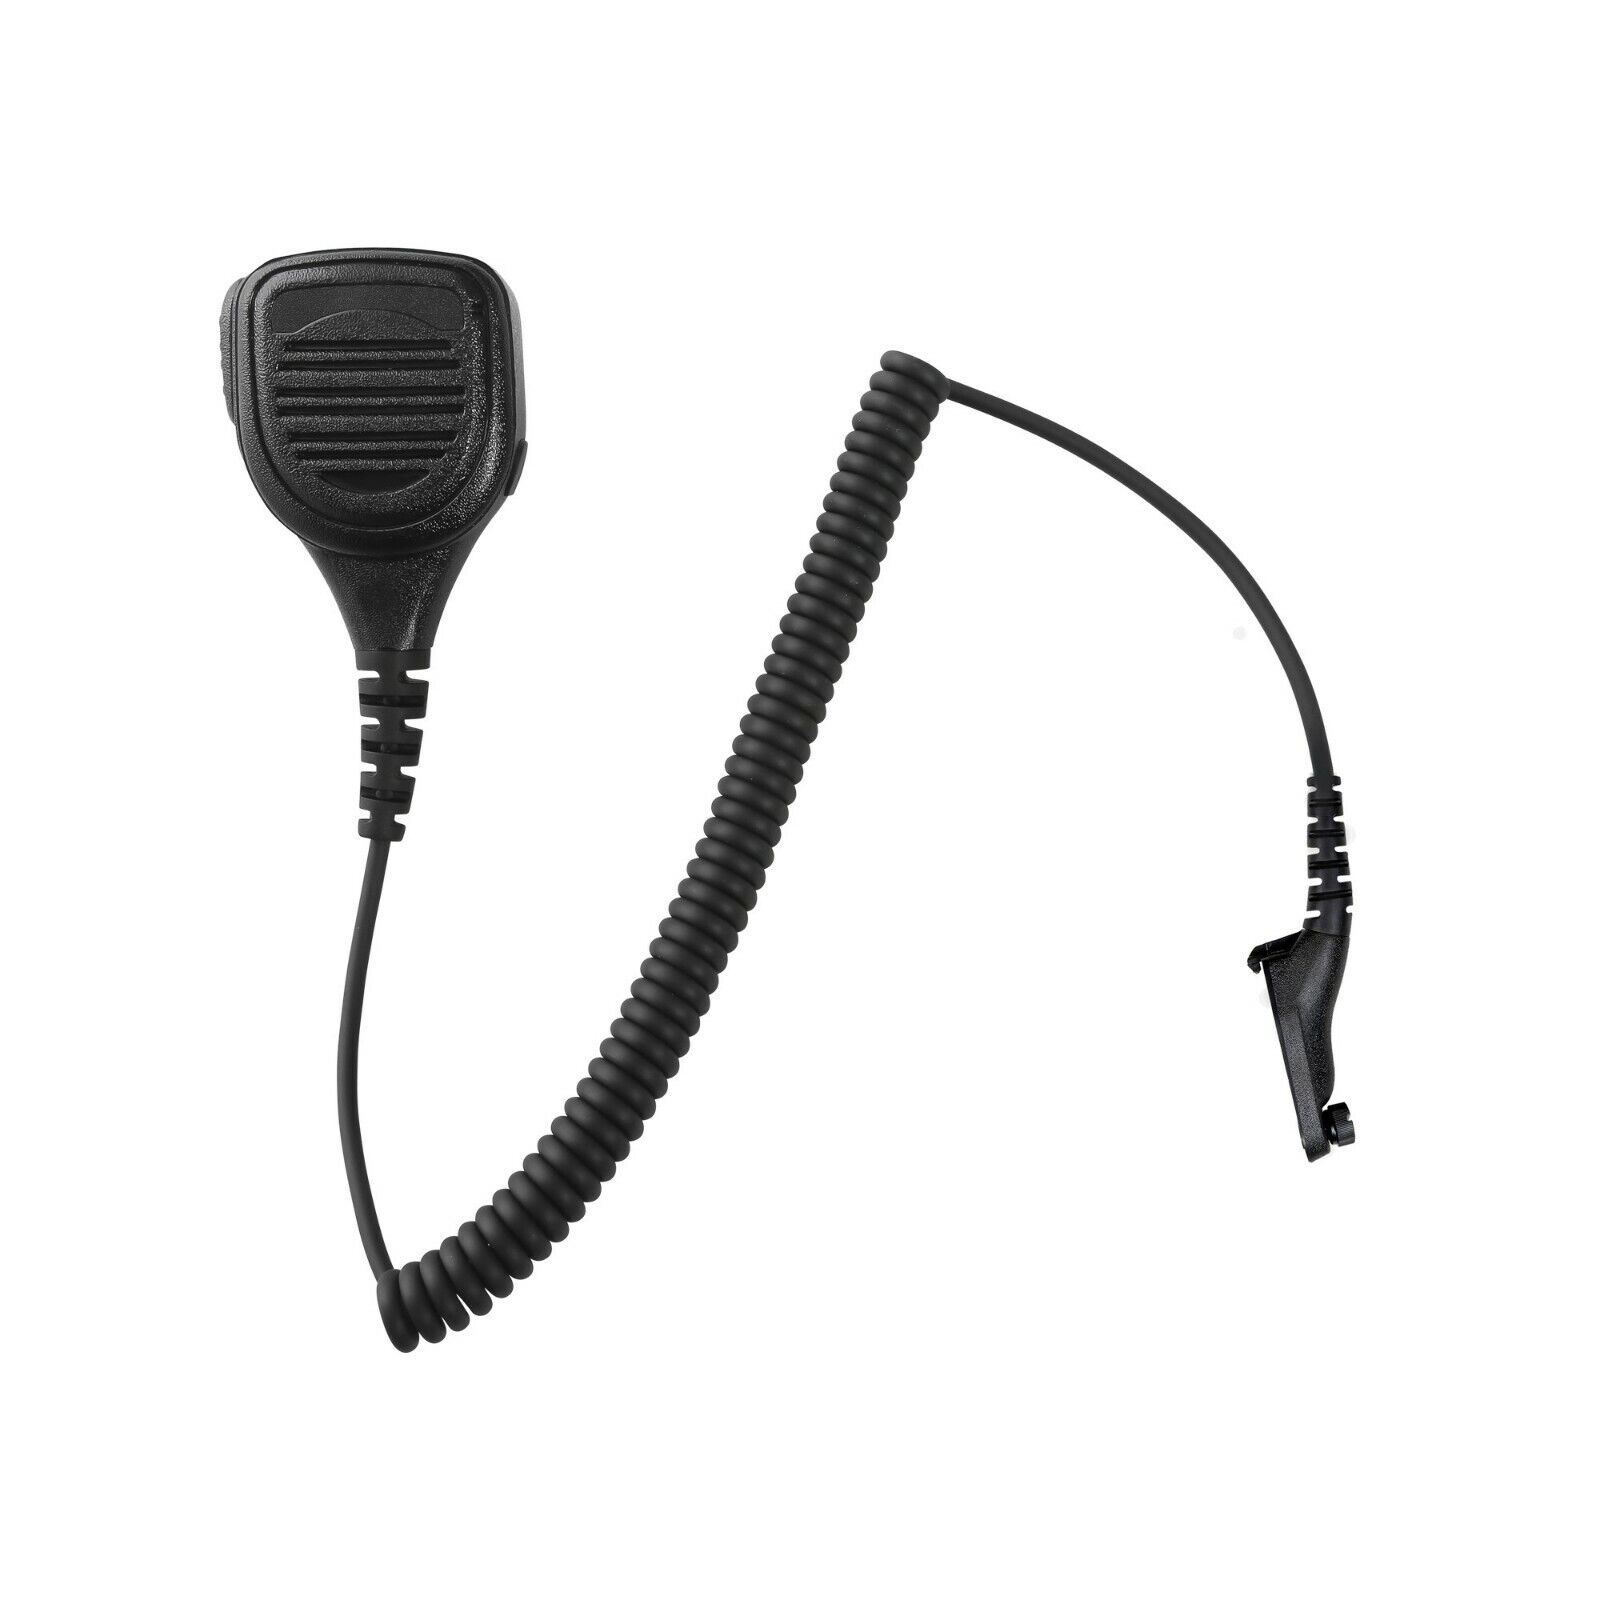 Public Safety Speaker Microphone For Motorola Dgp5050e Dgp5550